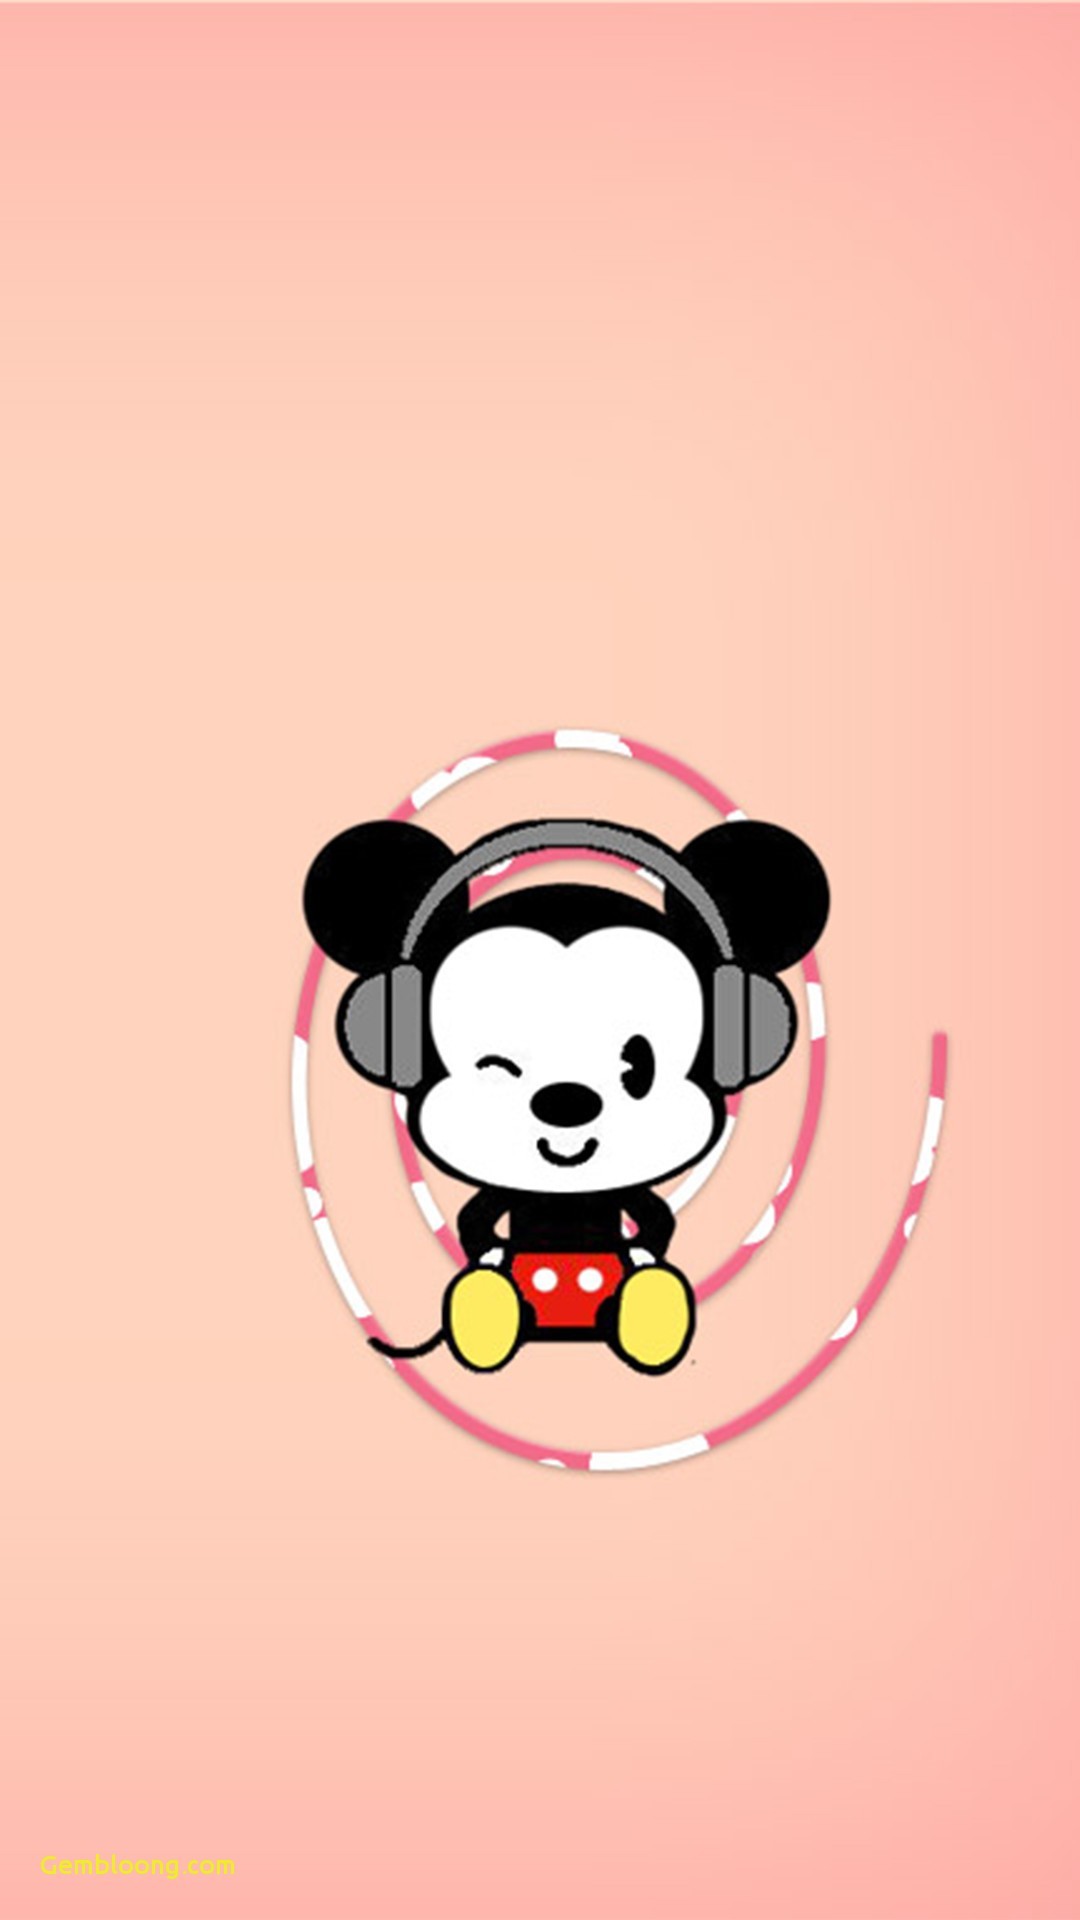 1080x1920 Cute Emoji Wallpapers iPhone